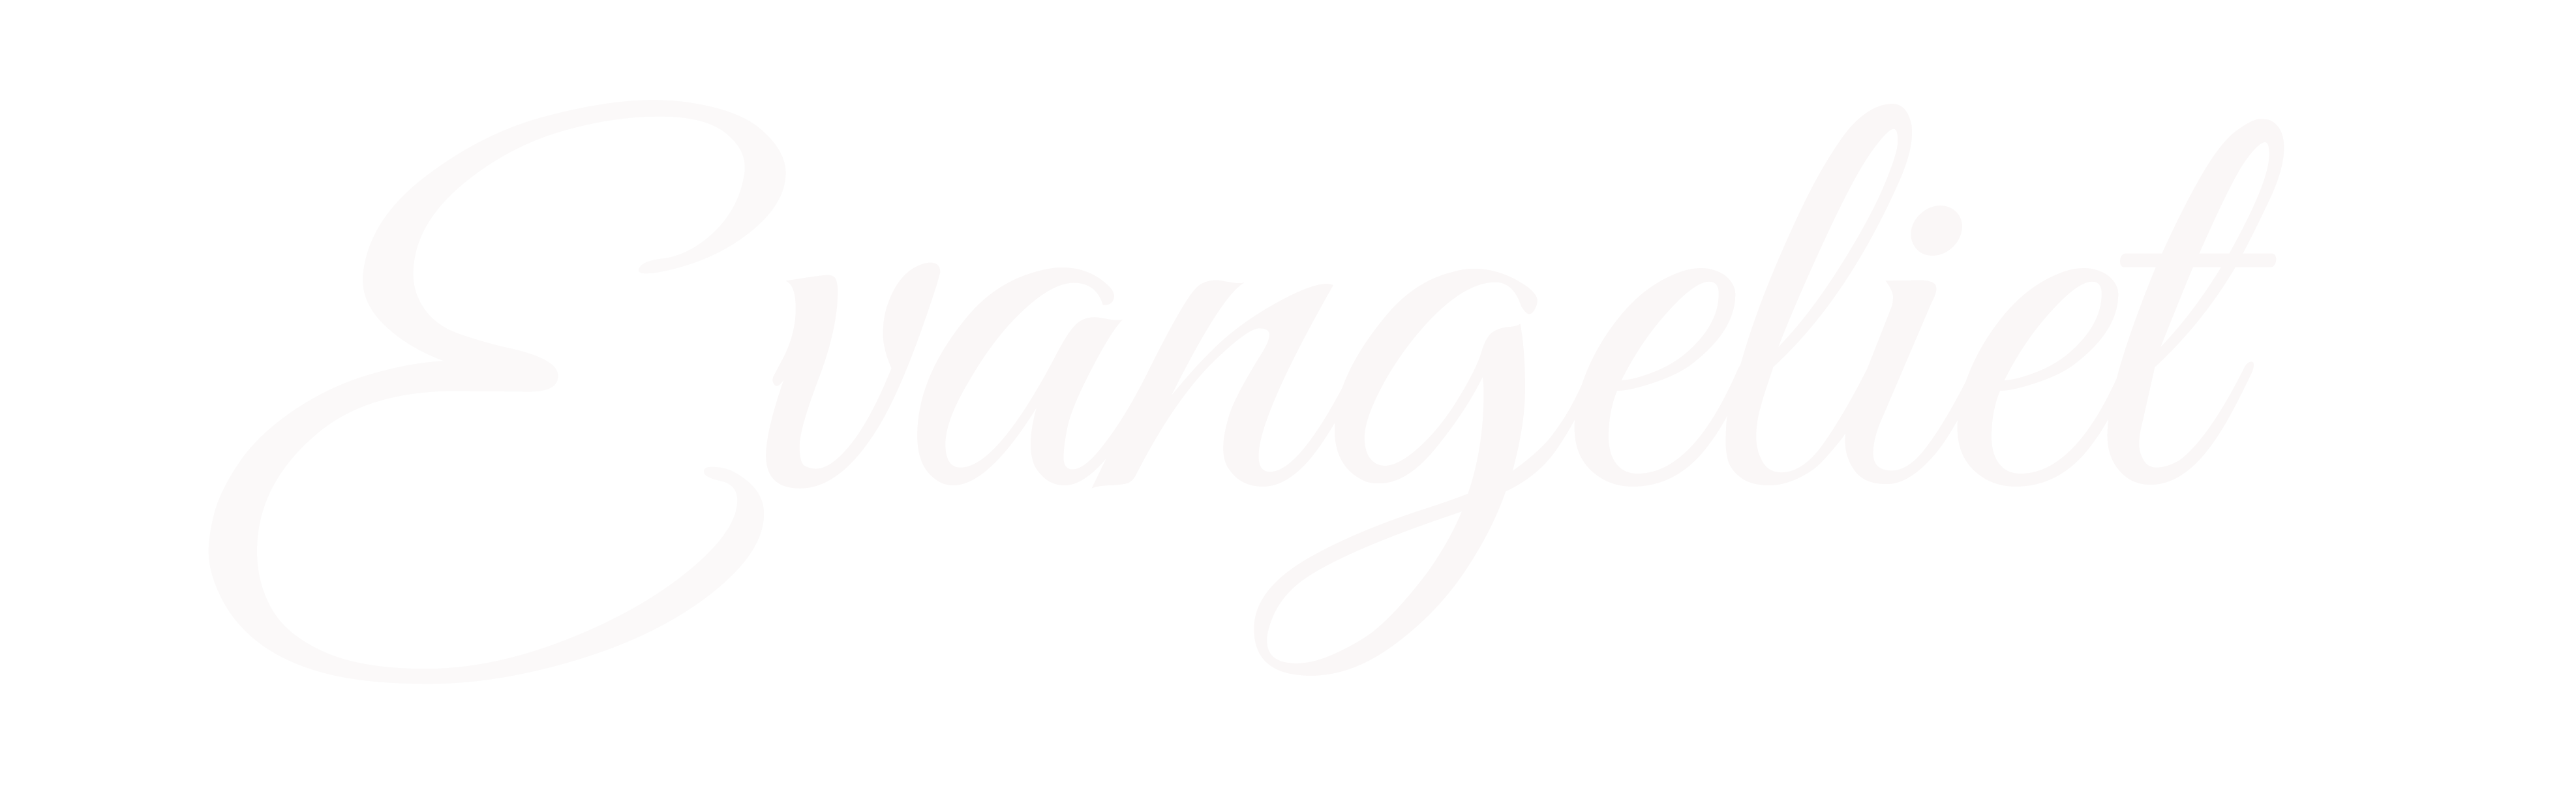 Bandet Evangeliets logotyp